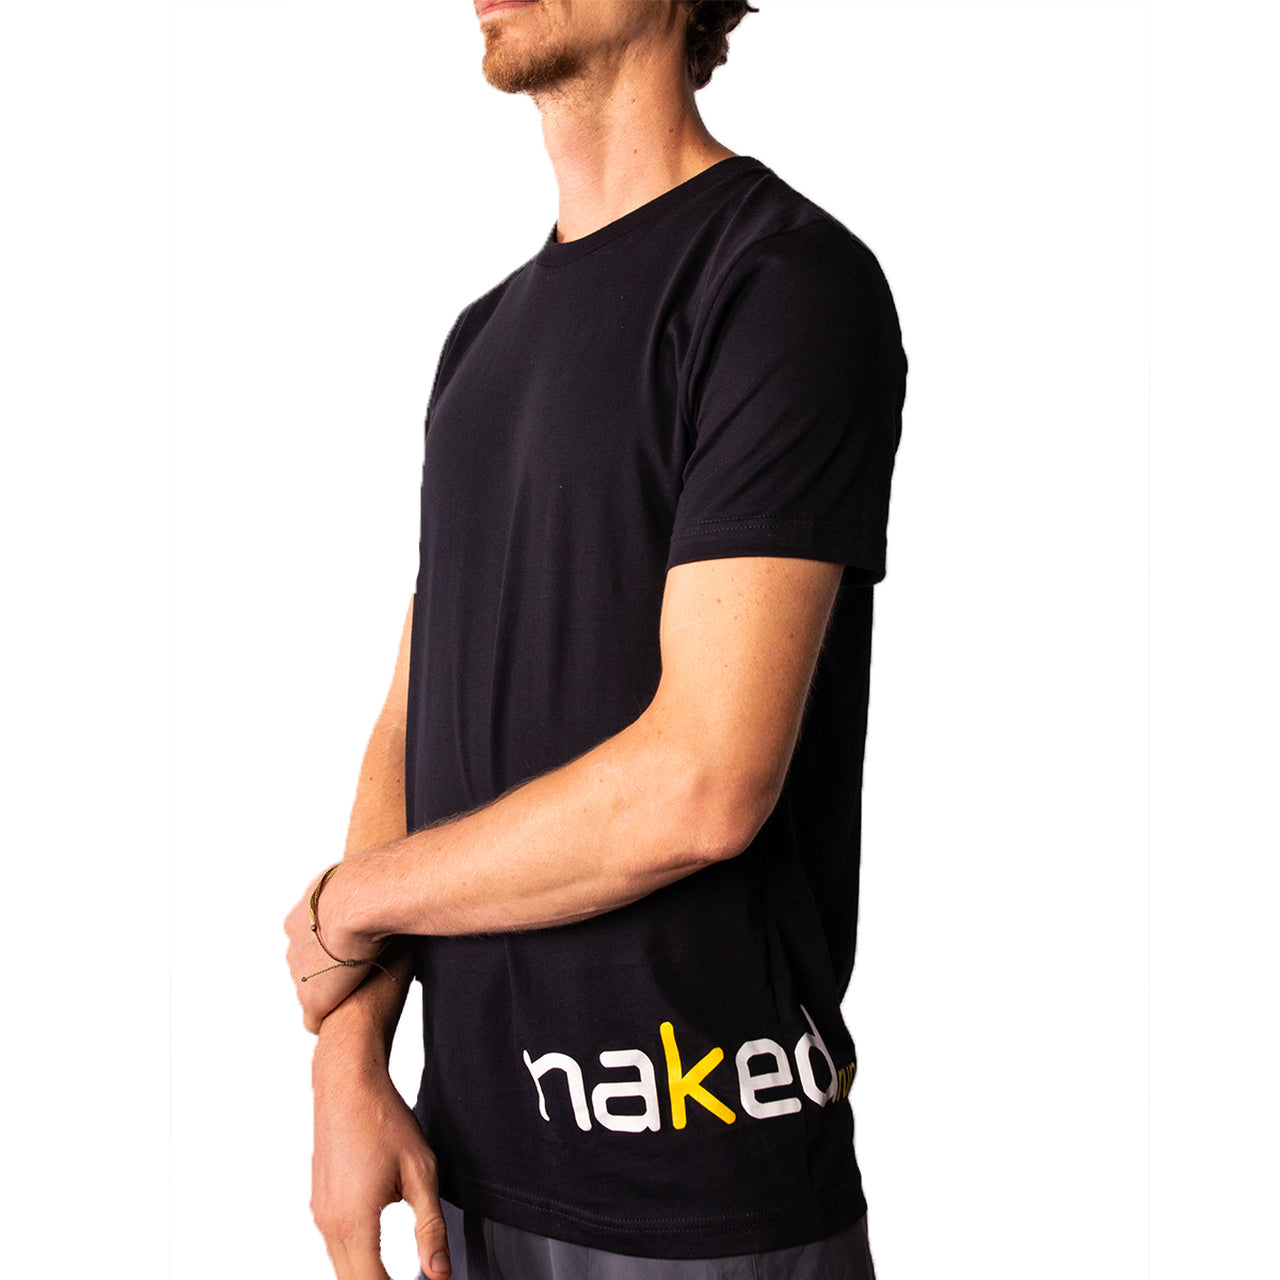 Naked® Logo Tee, Short Sleeve Tee Shirt - Men's